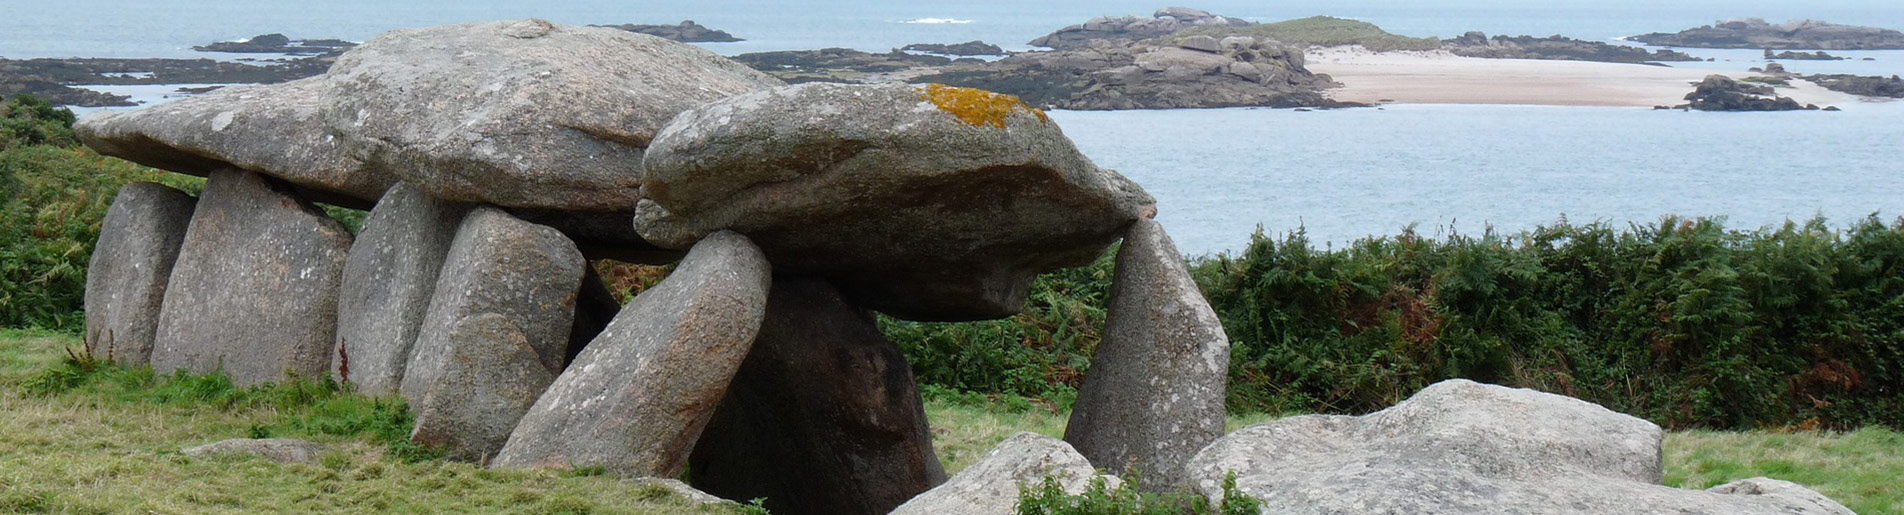 menhir dolmen bretagne